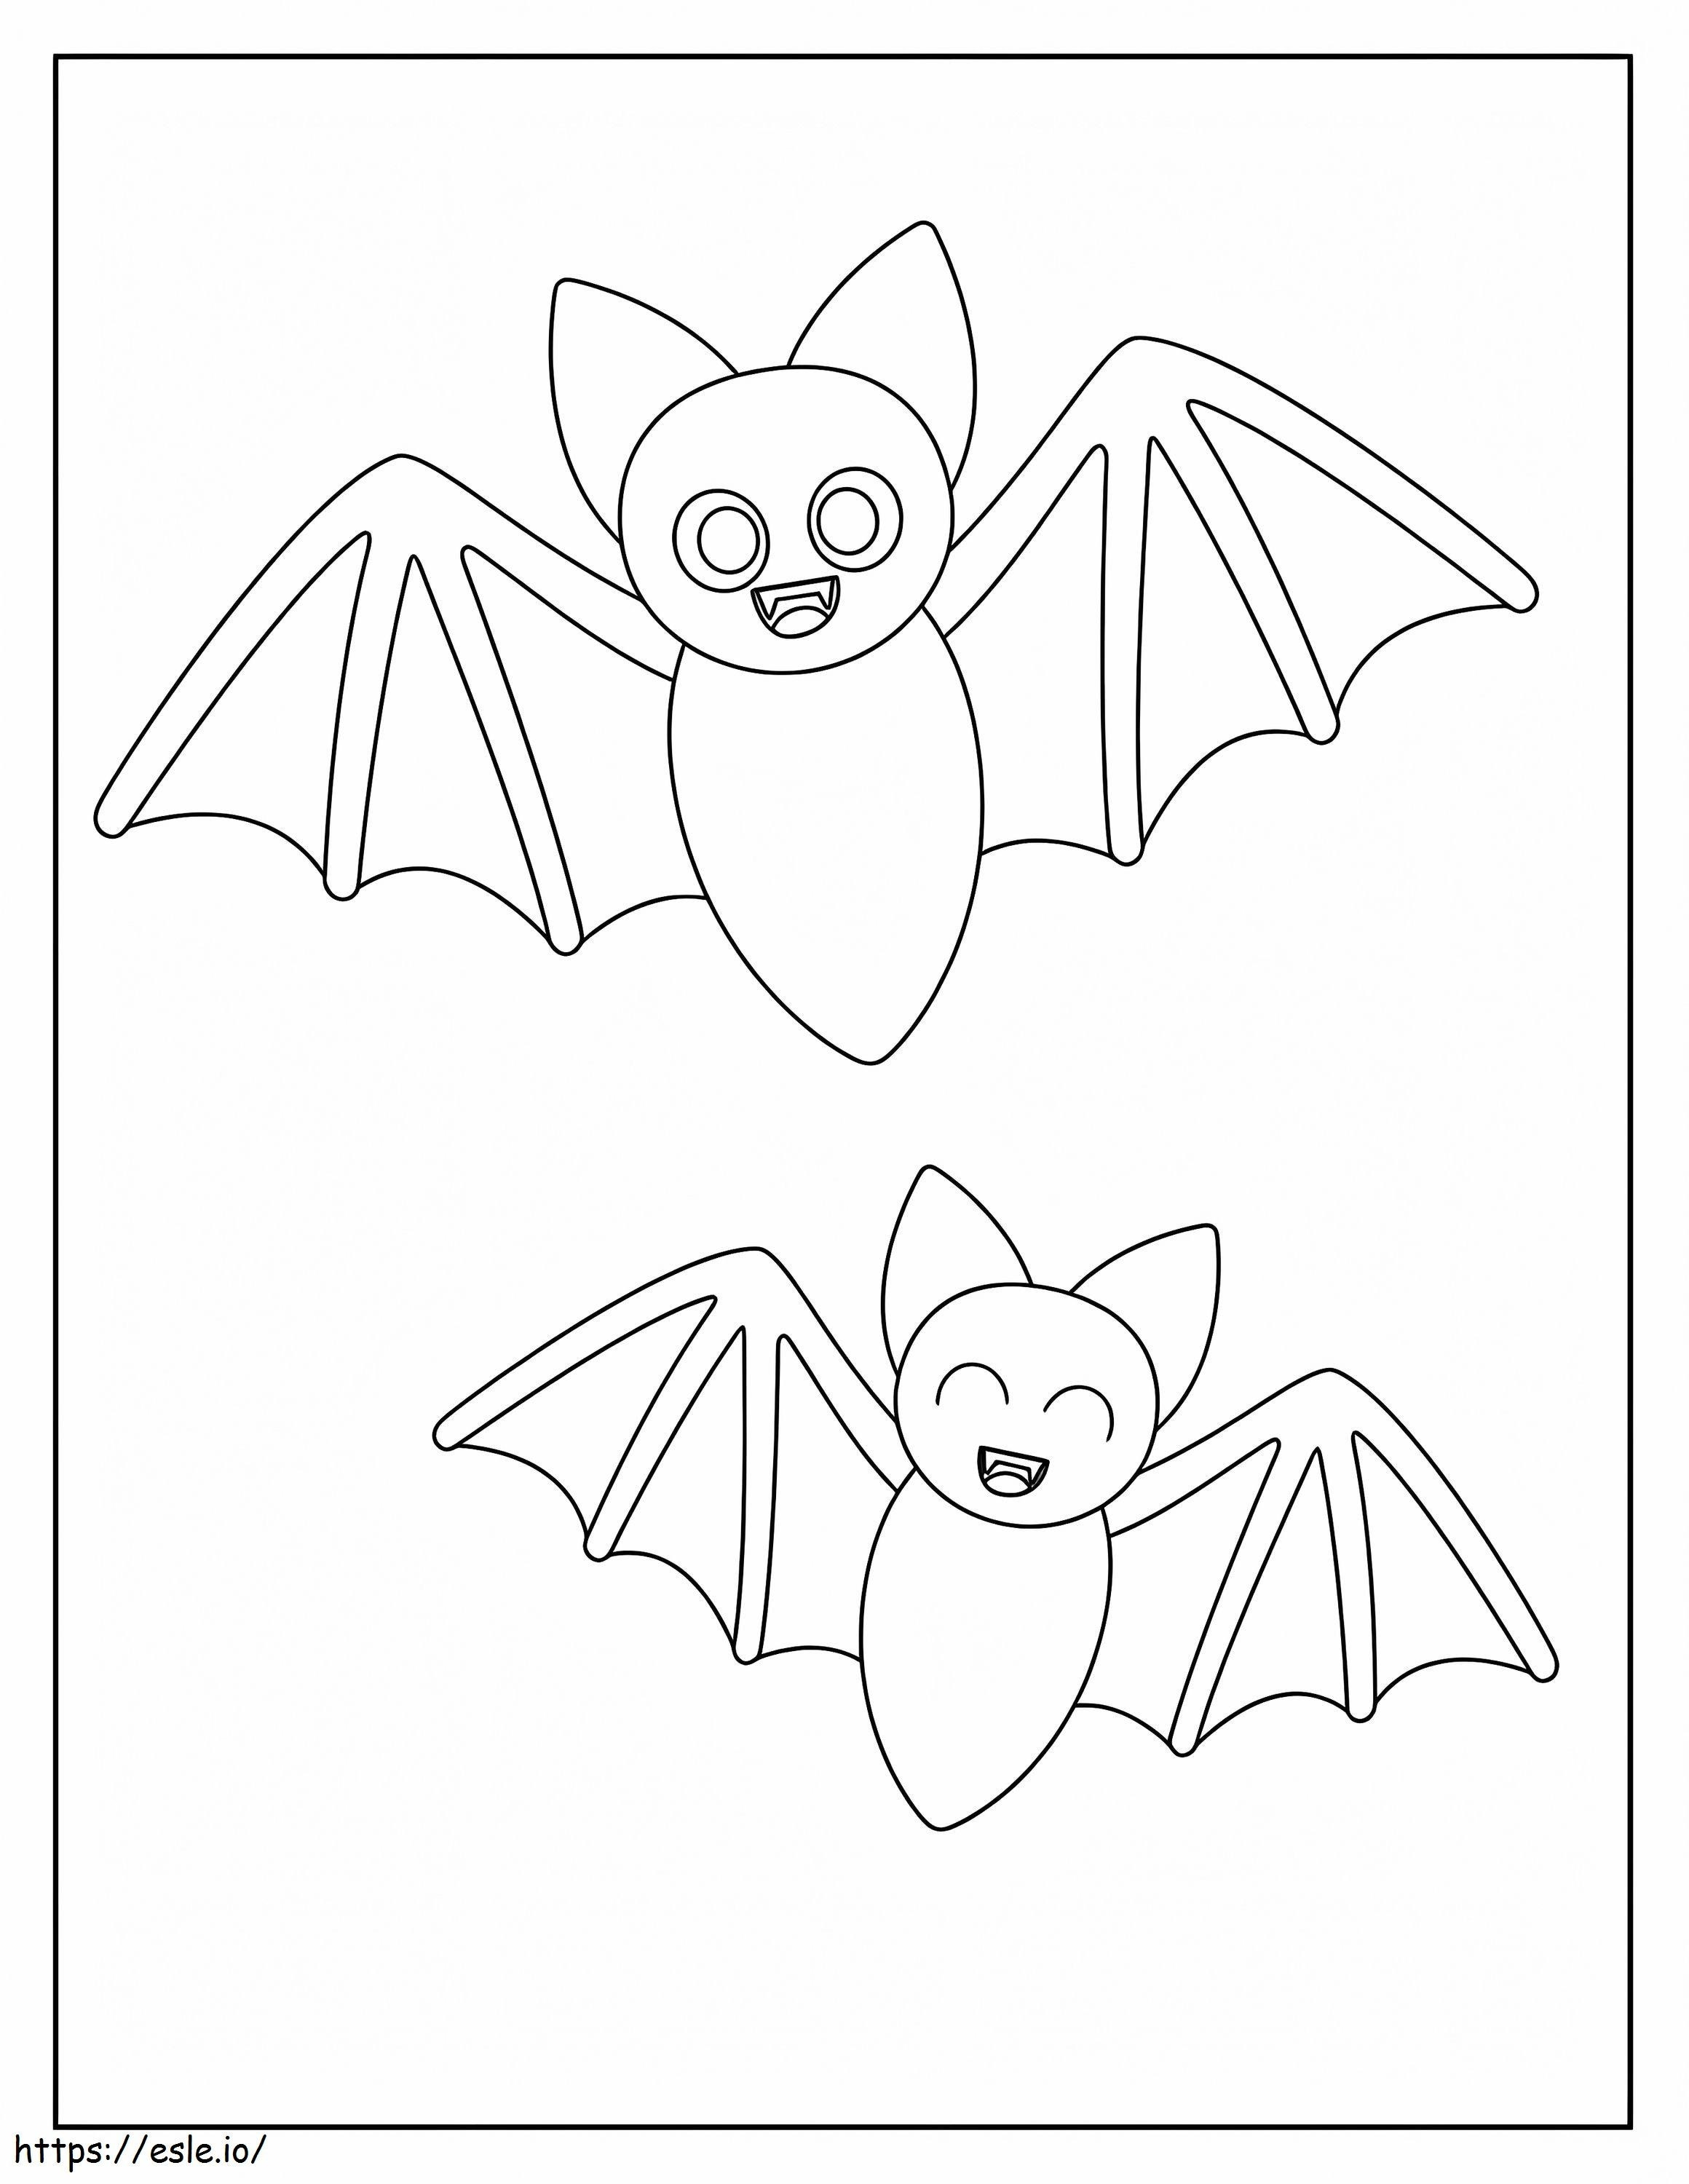 Morcego Fofo Assustador para colorir